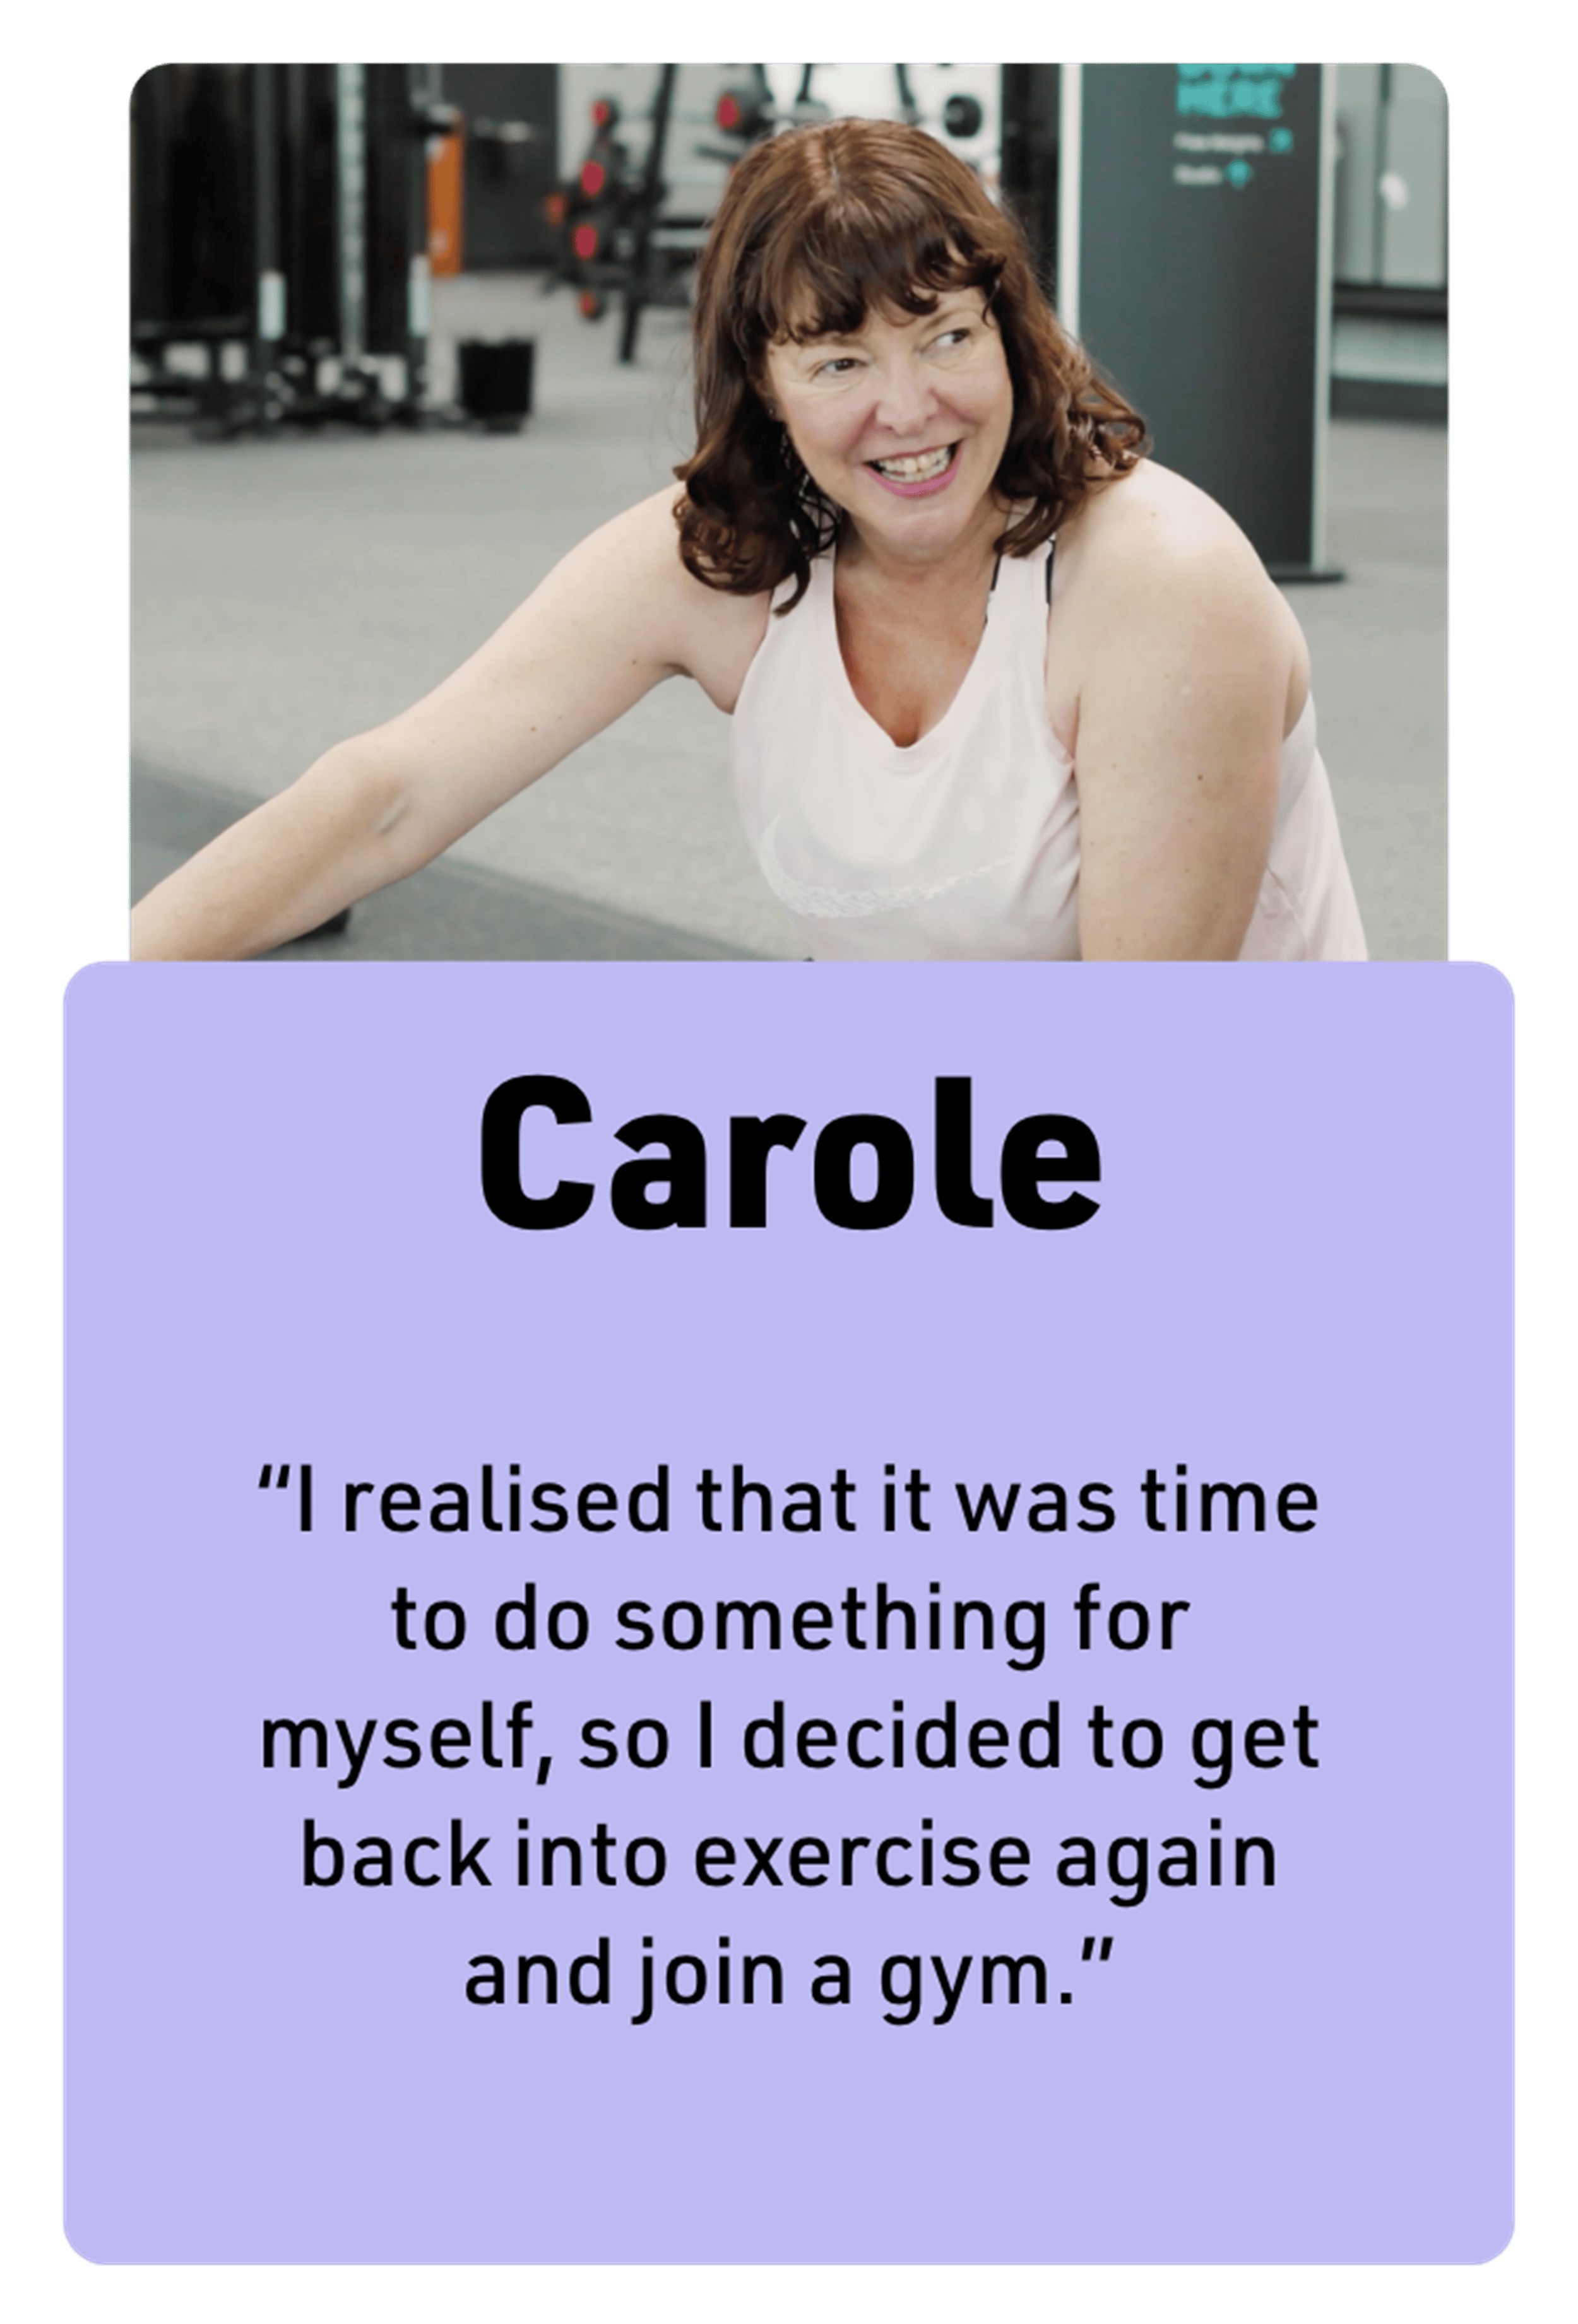 Carole's story